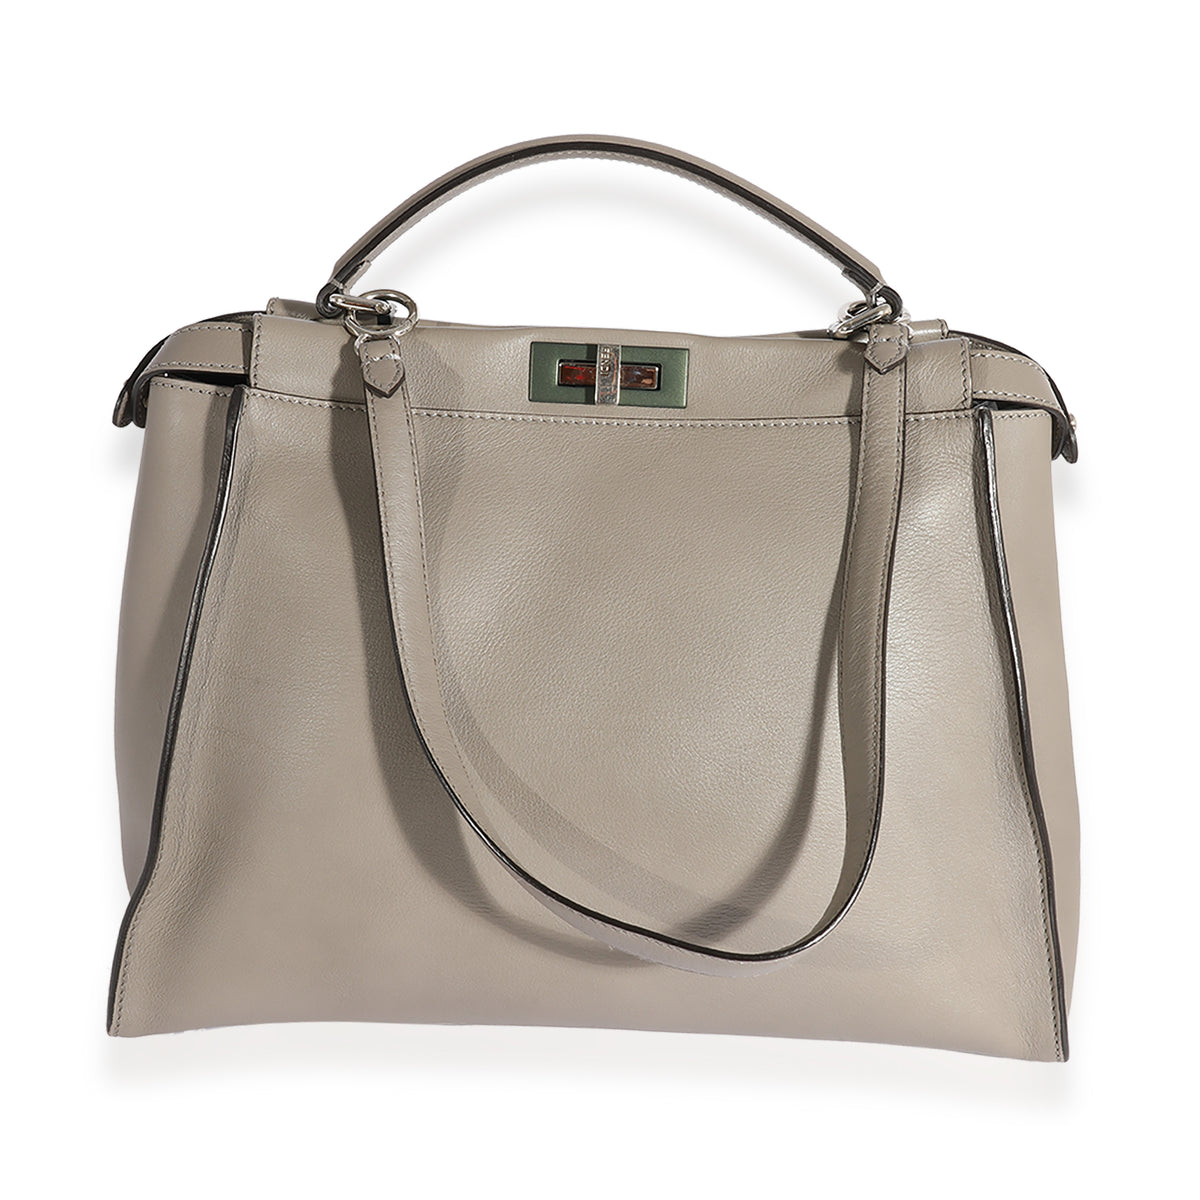 Fendi Gray Leather Large Peekaboo Bag